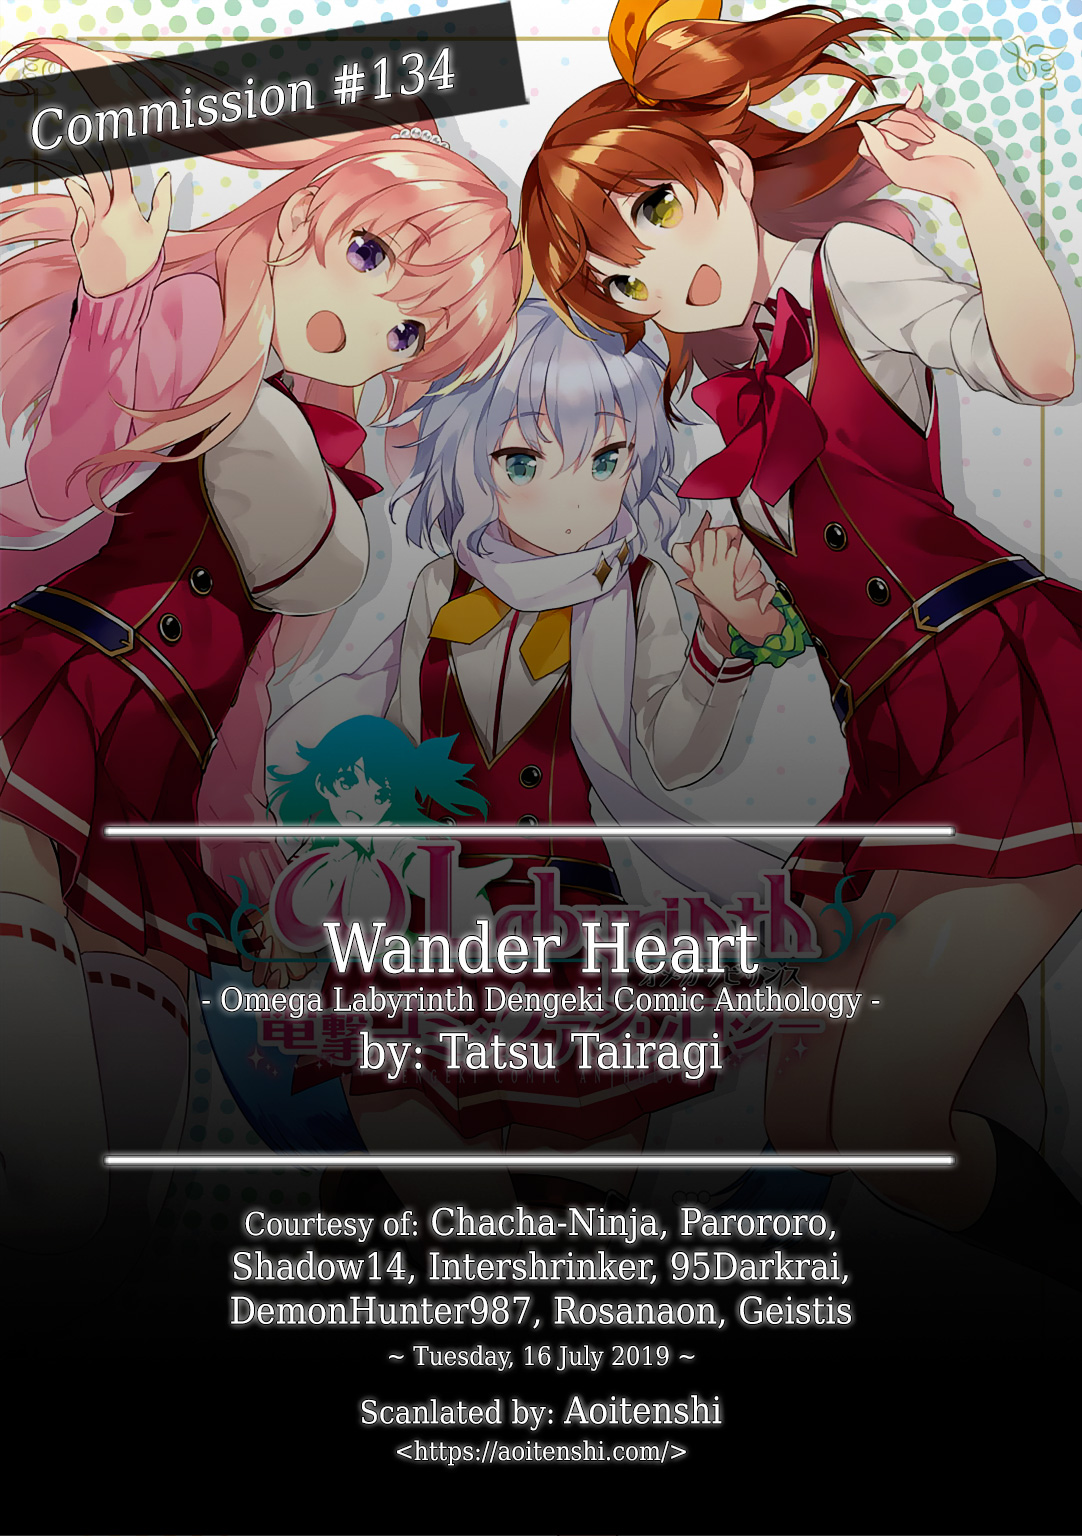 Omega Labyrinth Dengeki Comic Anthology Ch. 5 Wander Heart (Tatsu Tairagi)